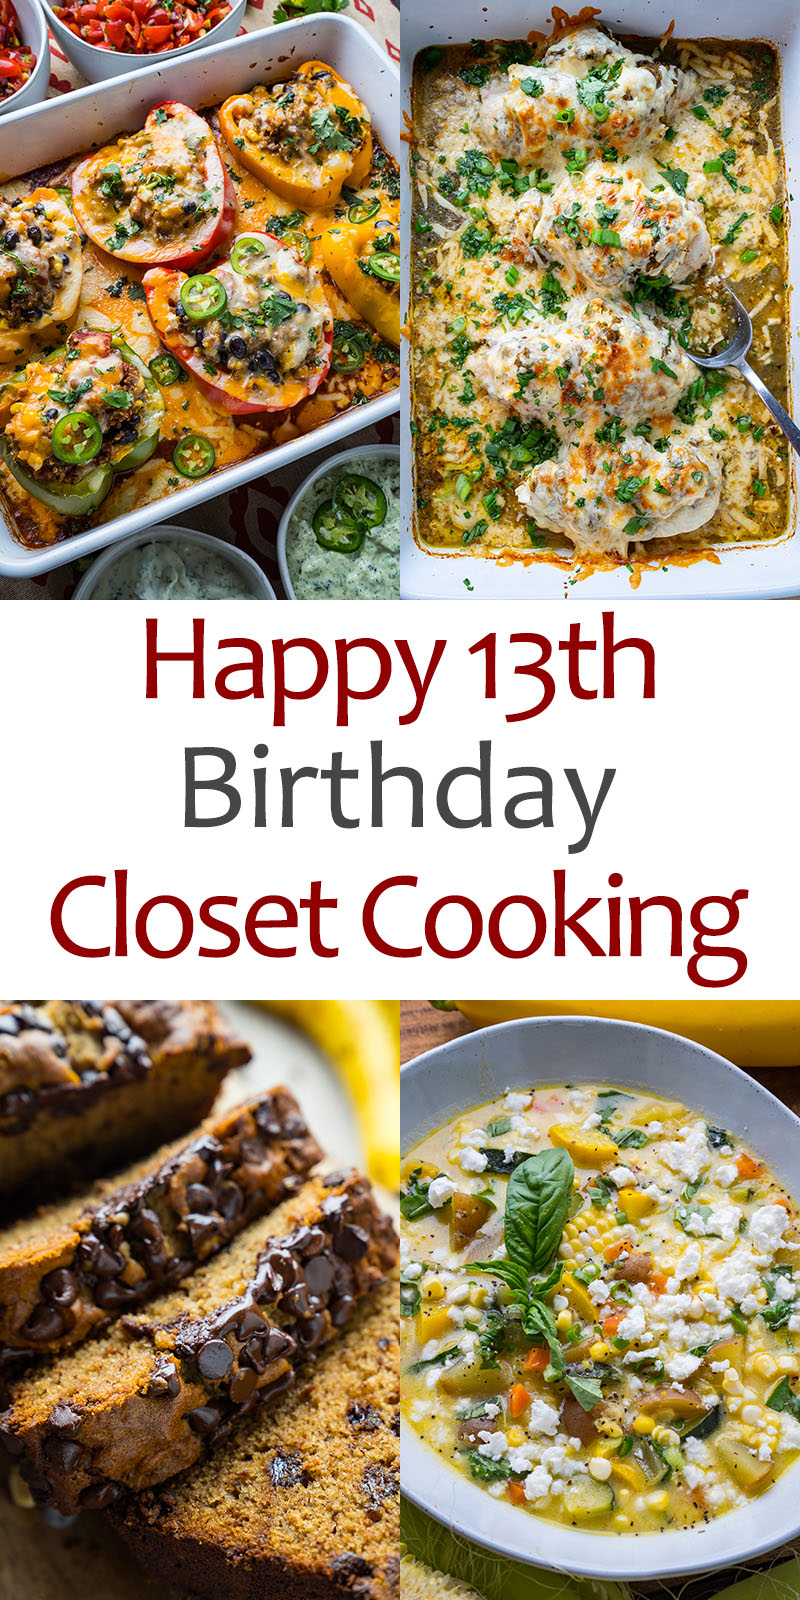 Happy 13th Birthday Closet Cooking